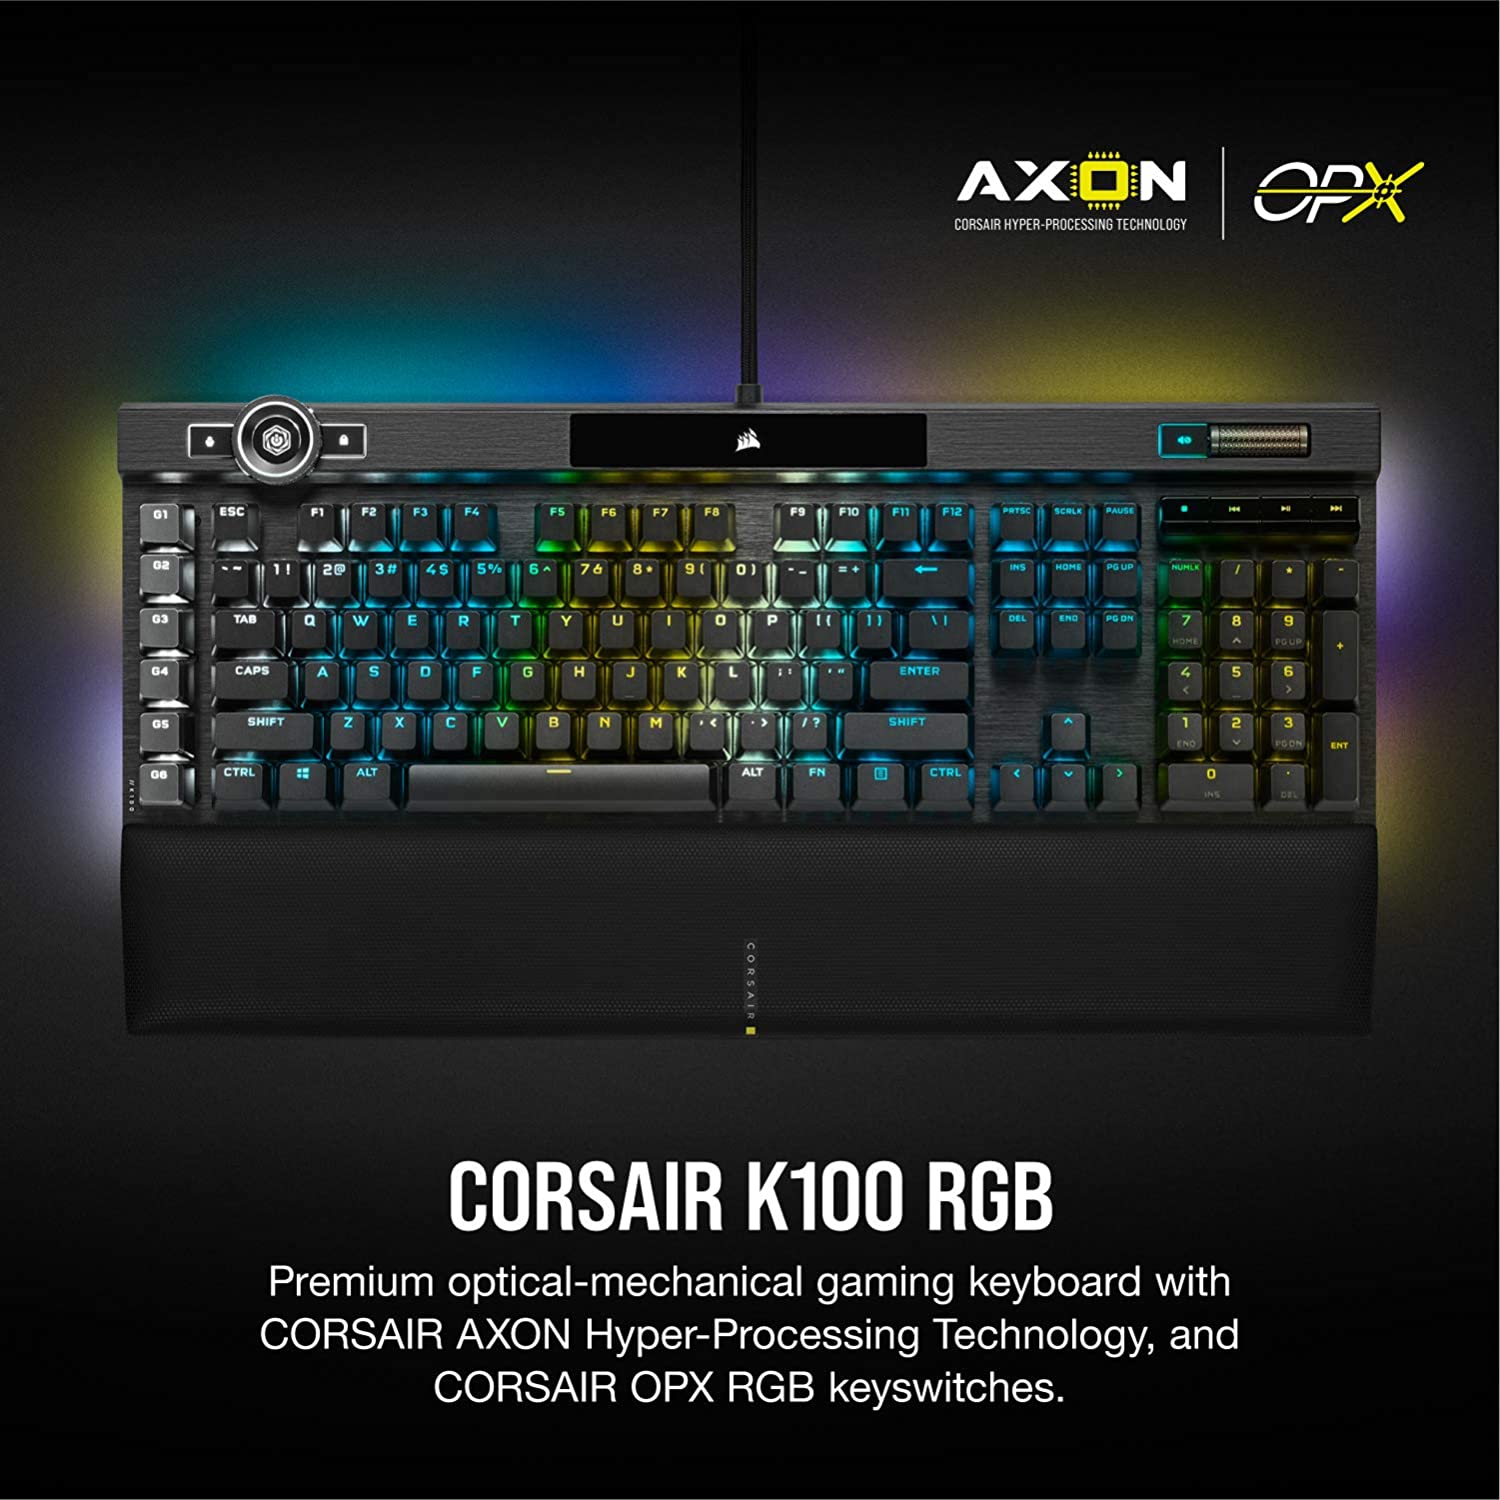 Corsair K100 RGB Optical-Mechanical Gaming Keyboard - Corsair OPX RGB Optical-Mechanical Key switches $199.99